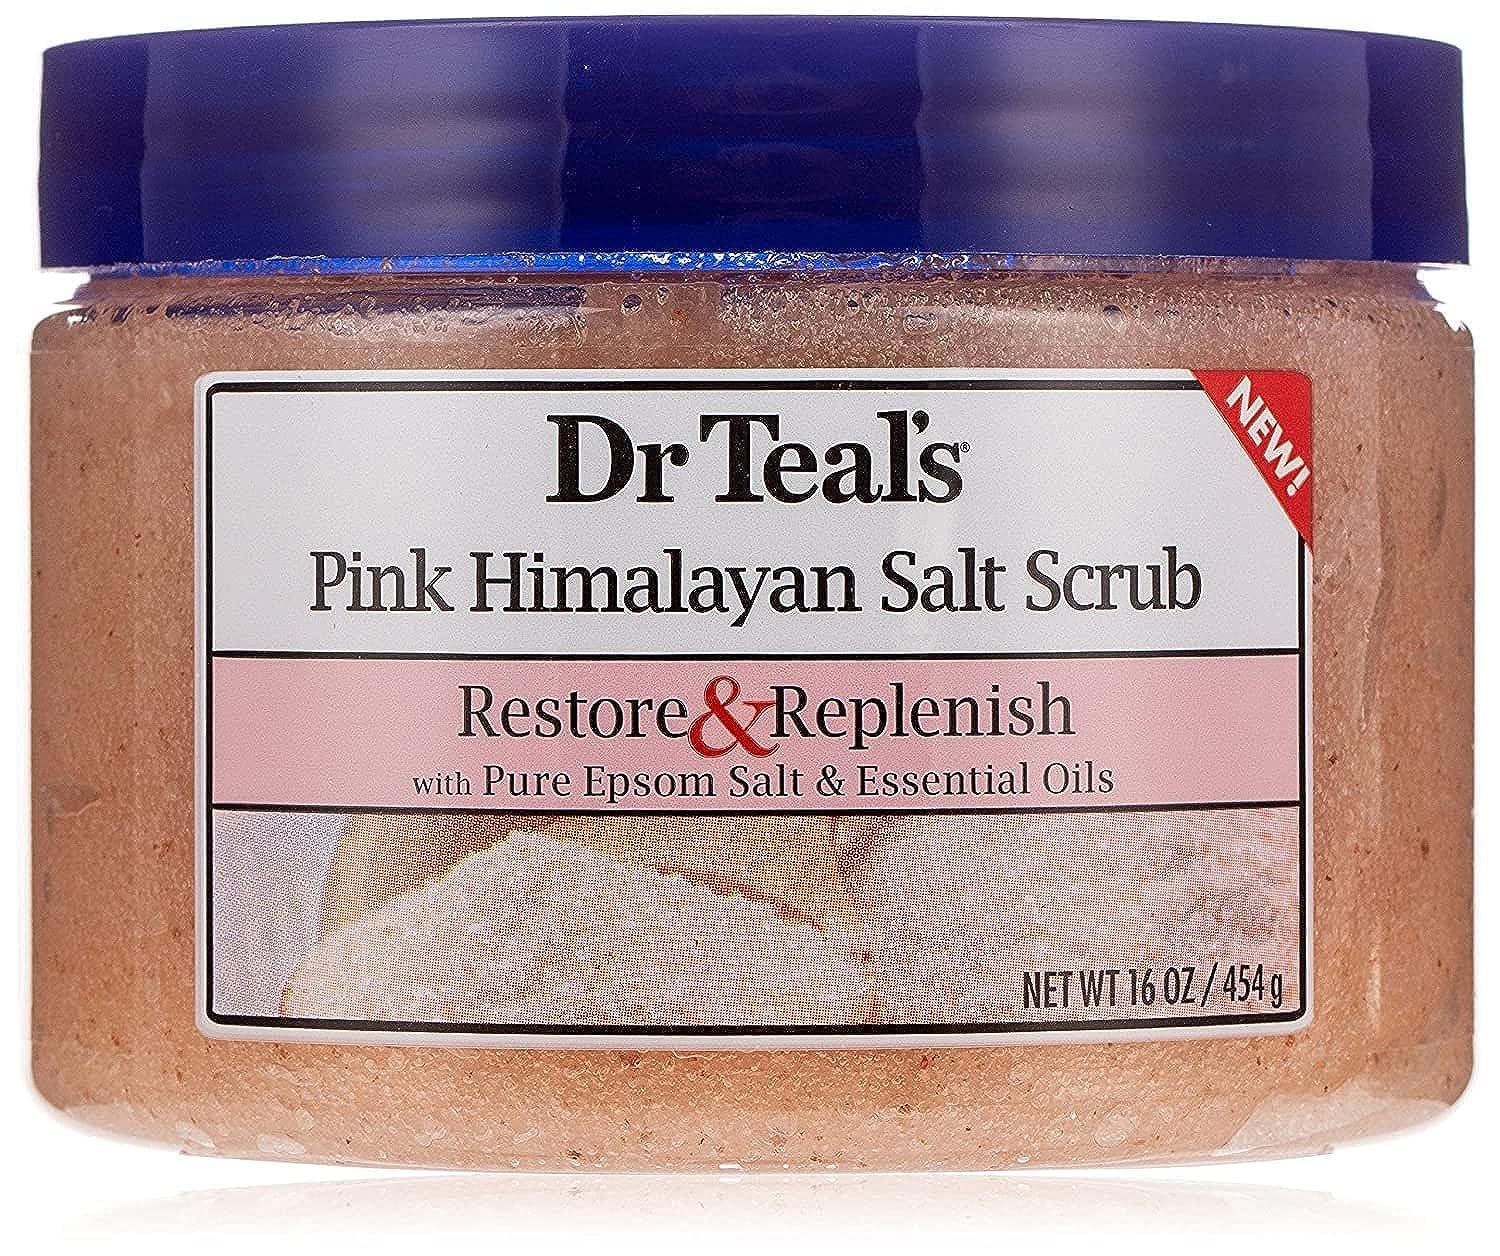 Dr. Teal's Salt Scrub Pink Himalayan Restore 16 Ounce Jar (Pack of 2) - $32.99